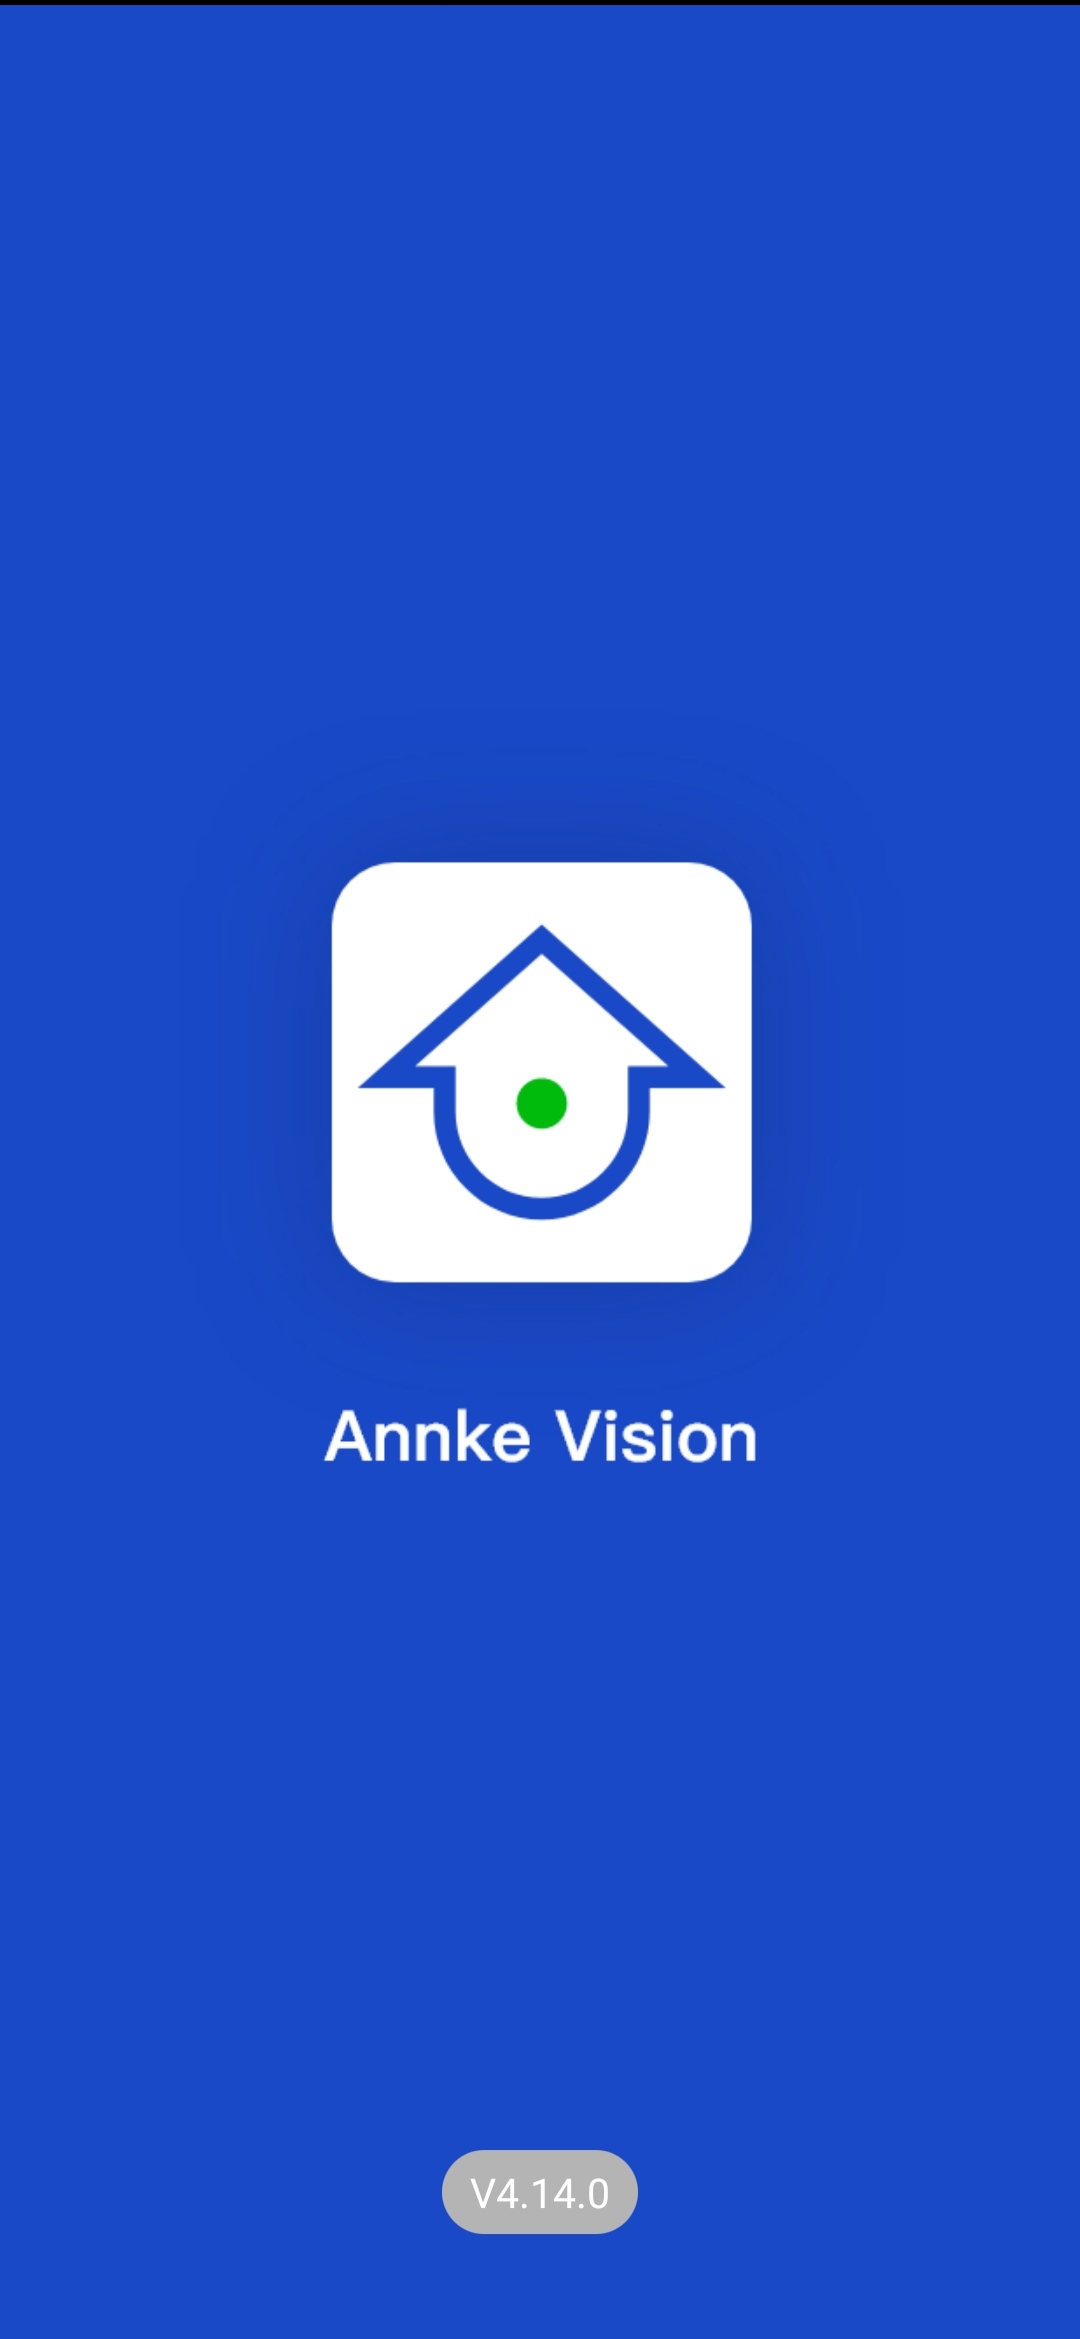 ANNKE_VISION.jpg